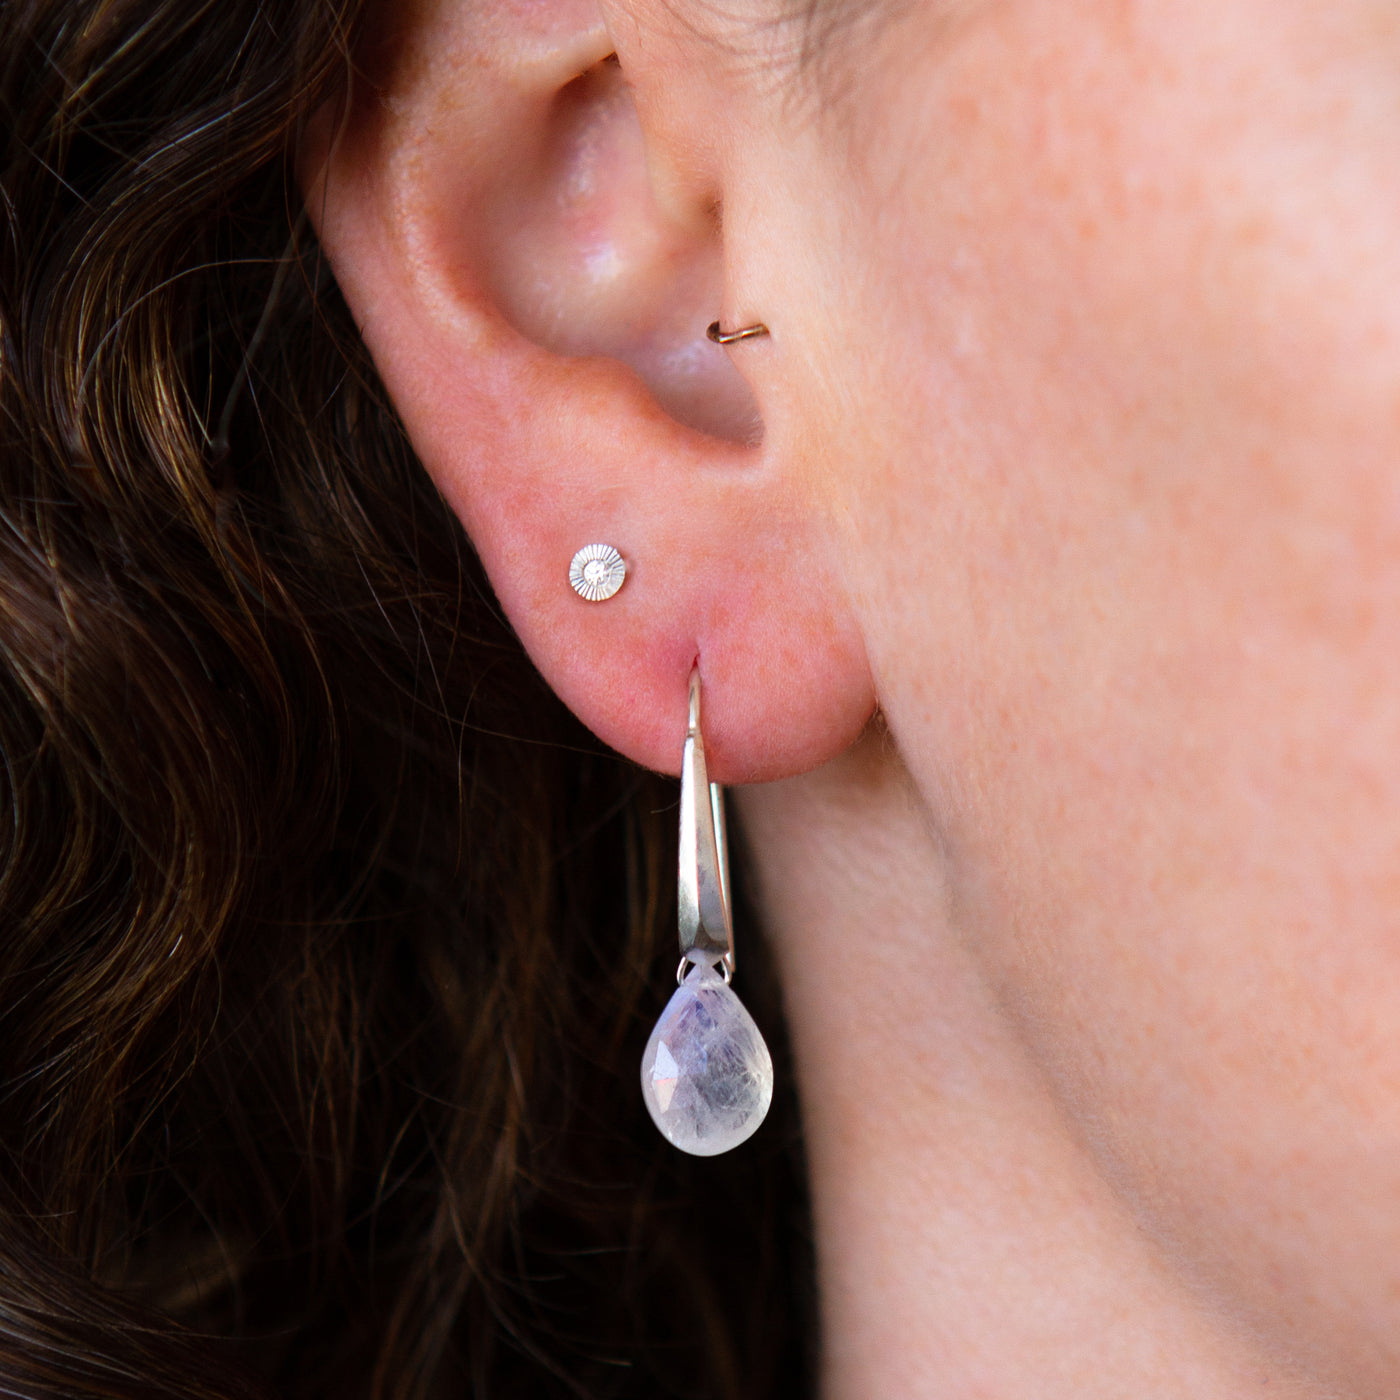 sterling silver fragment dangle earrings with moonstone drops on an ear